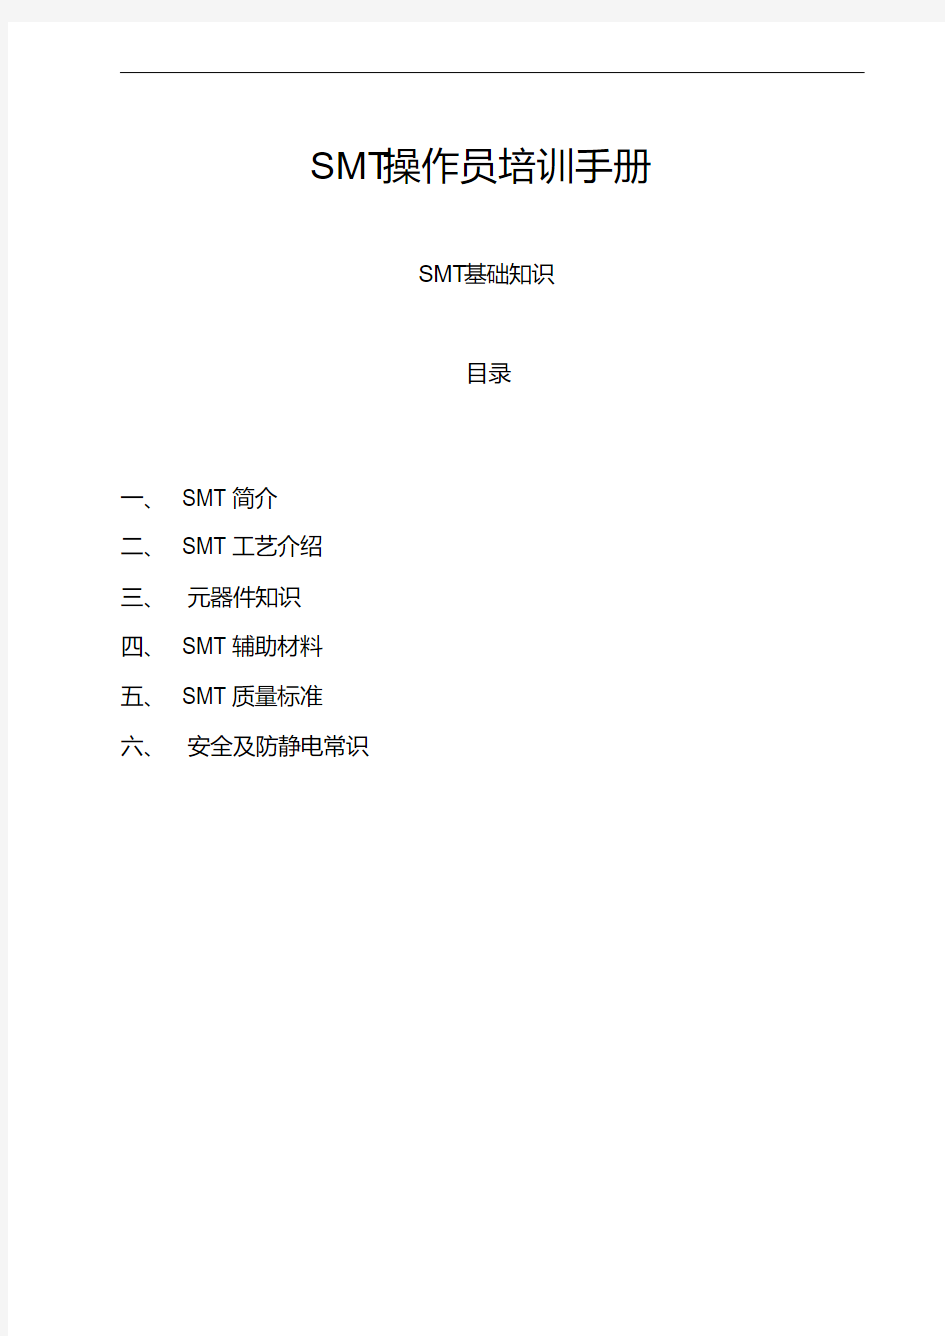 SMT操作员培训手册,SMT培训资料(全)